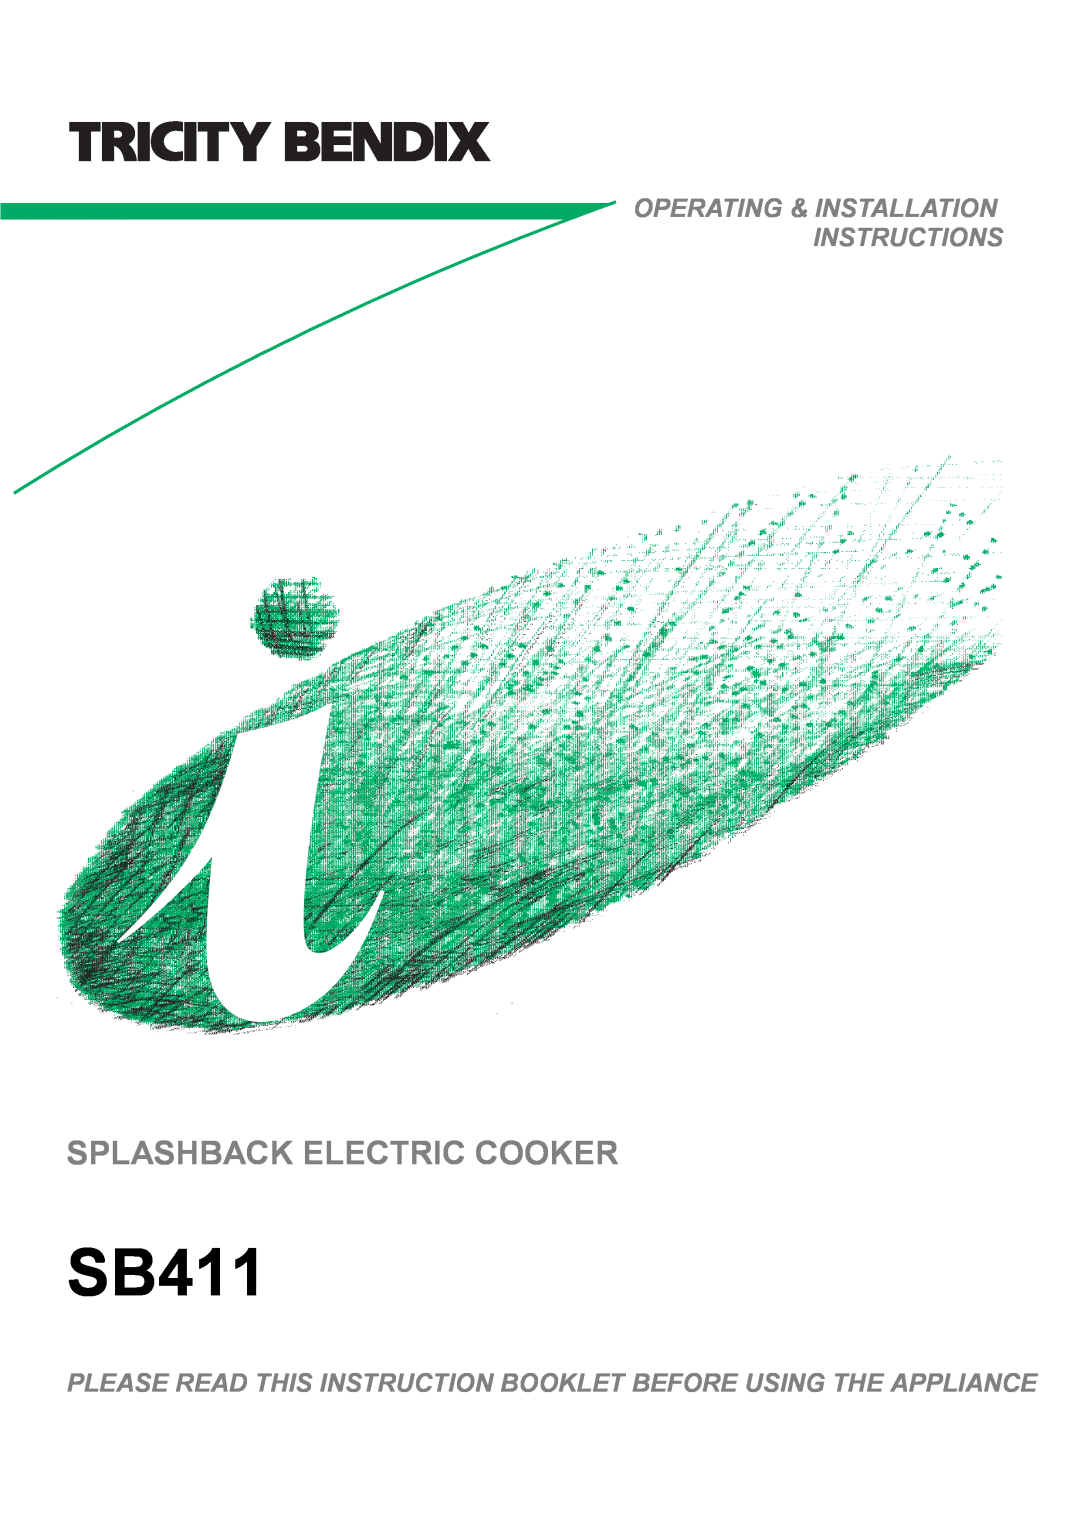 Tricity Bendix SB411 installation instructions Splashback Electric Cooker, Operating & Installation Instructions 